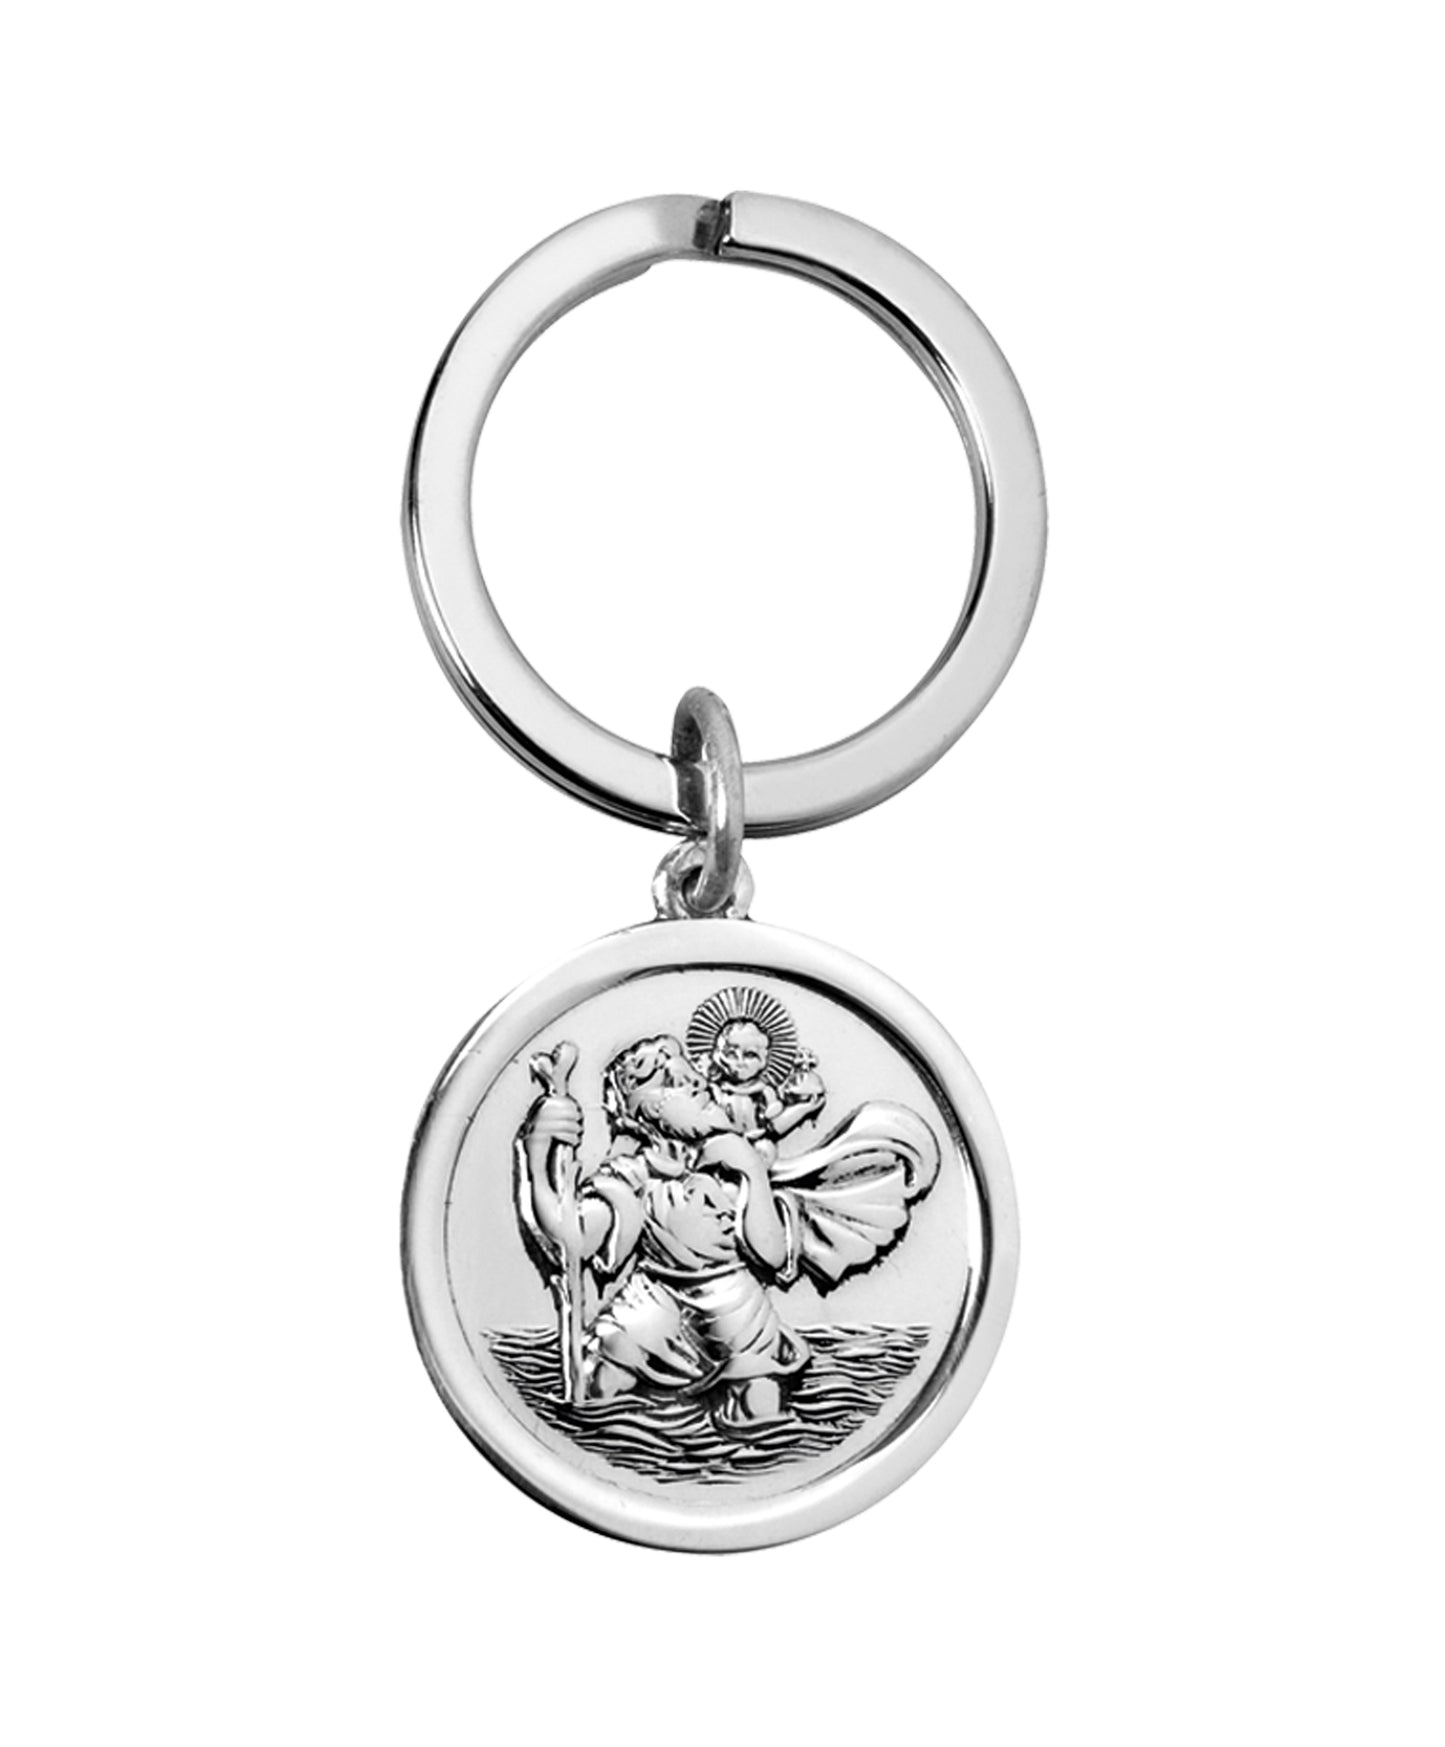 Sterling Silver St. Christopher Medal Key Ring